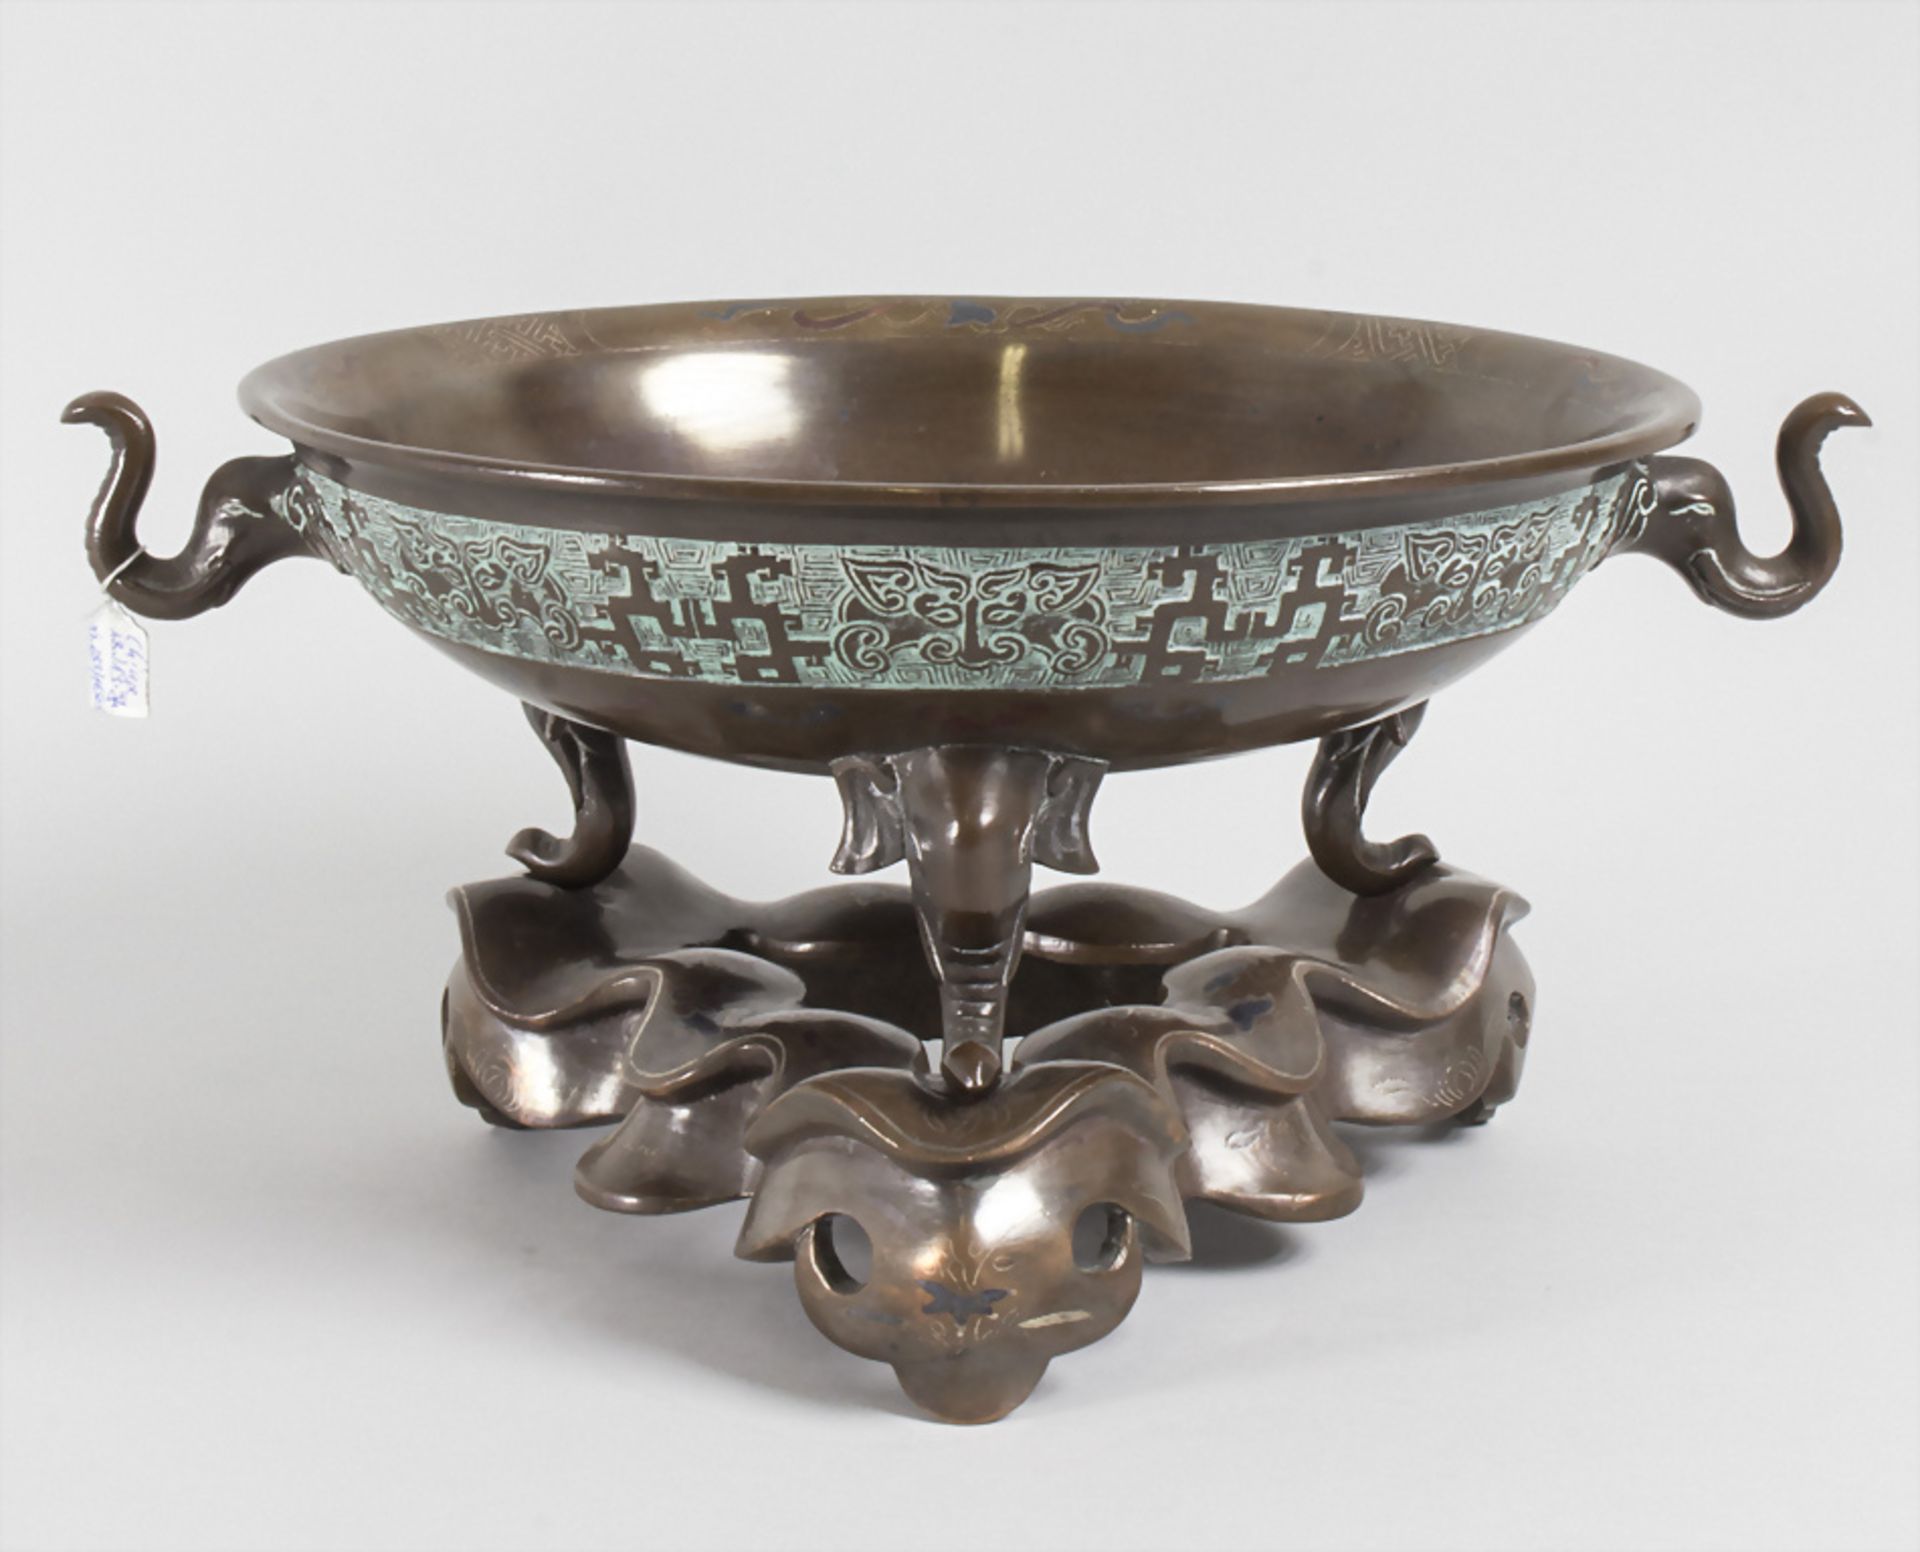 Große Zierschale / A large decorative bowl, China, Qing Dynastie (1644-1911), 18./19. Jh.